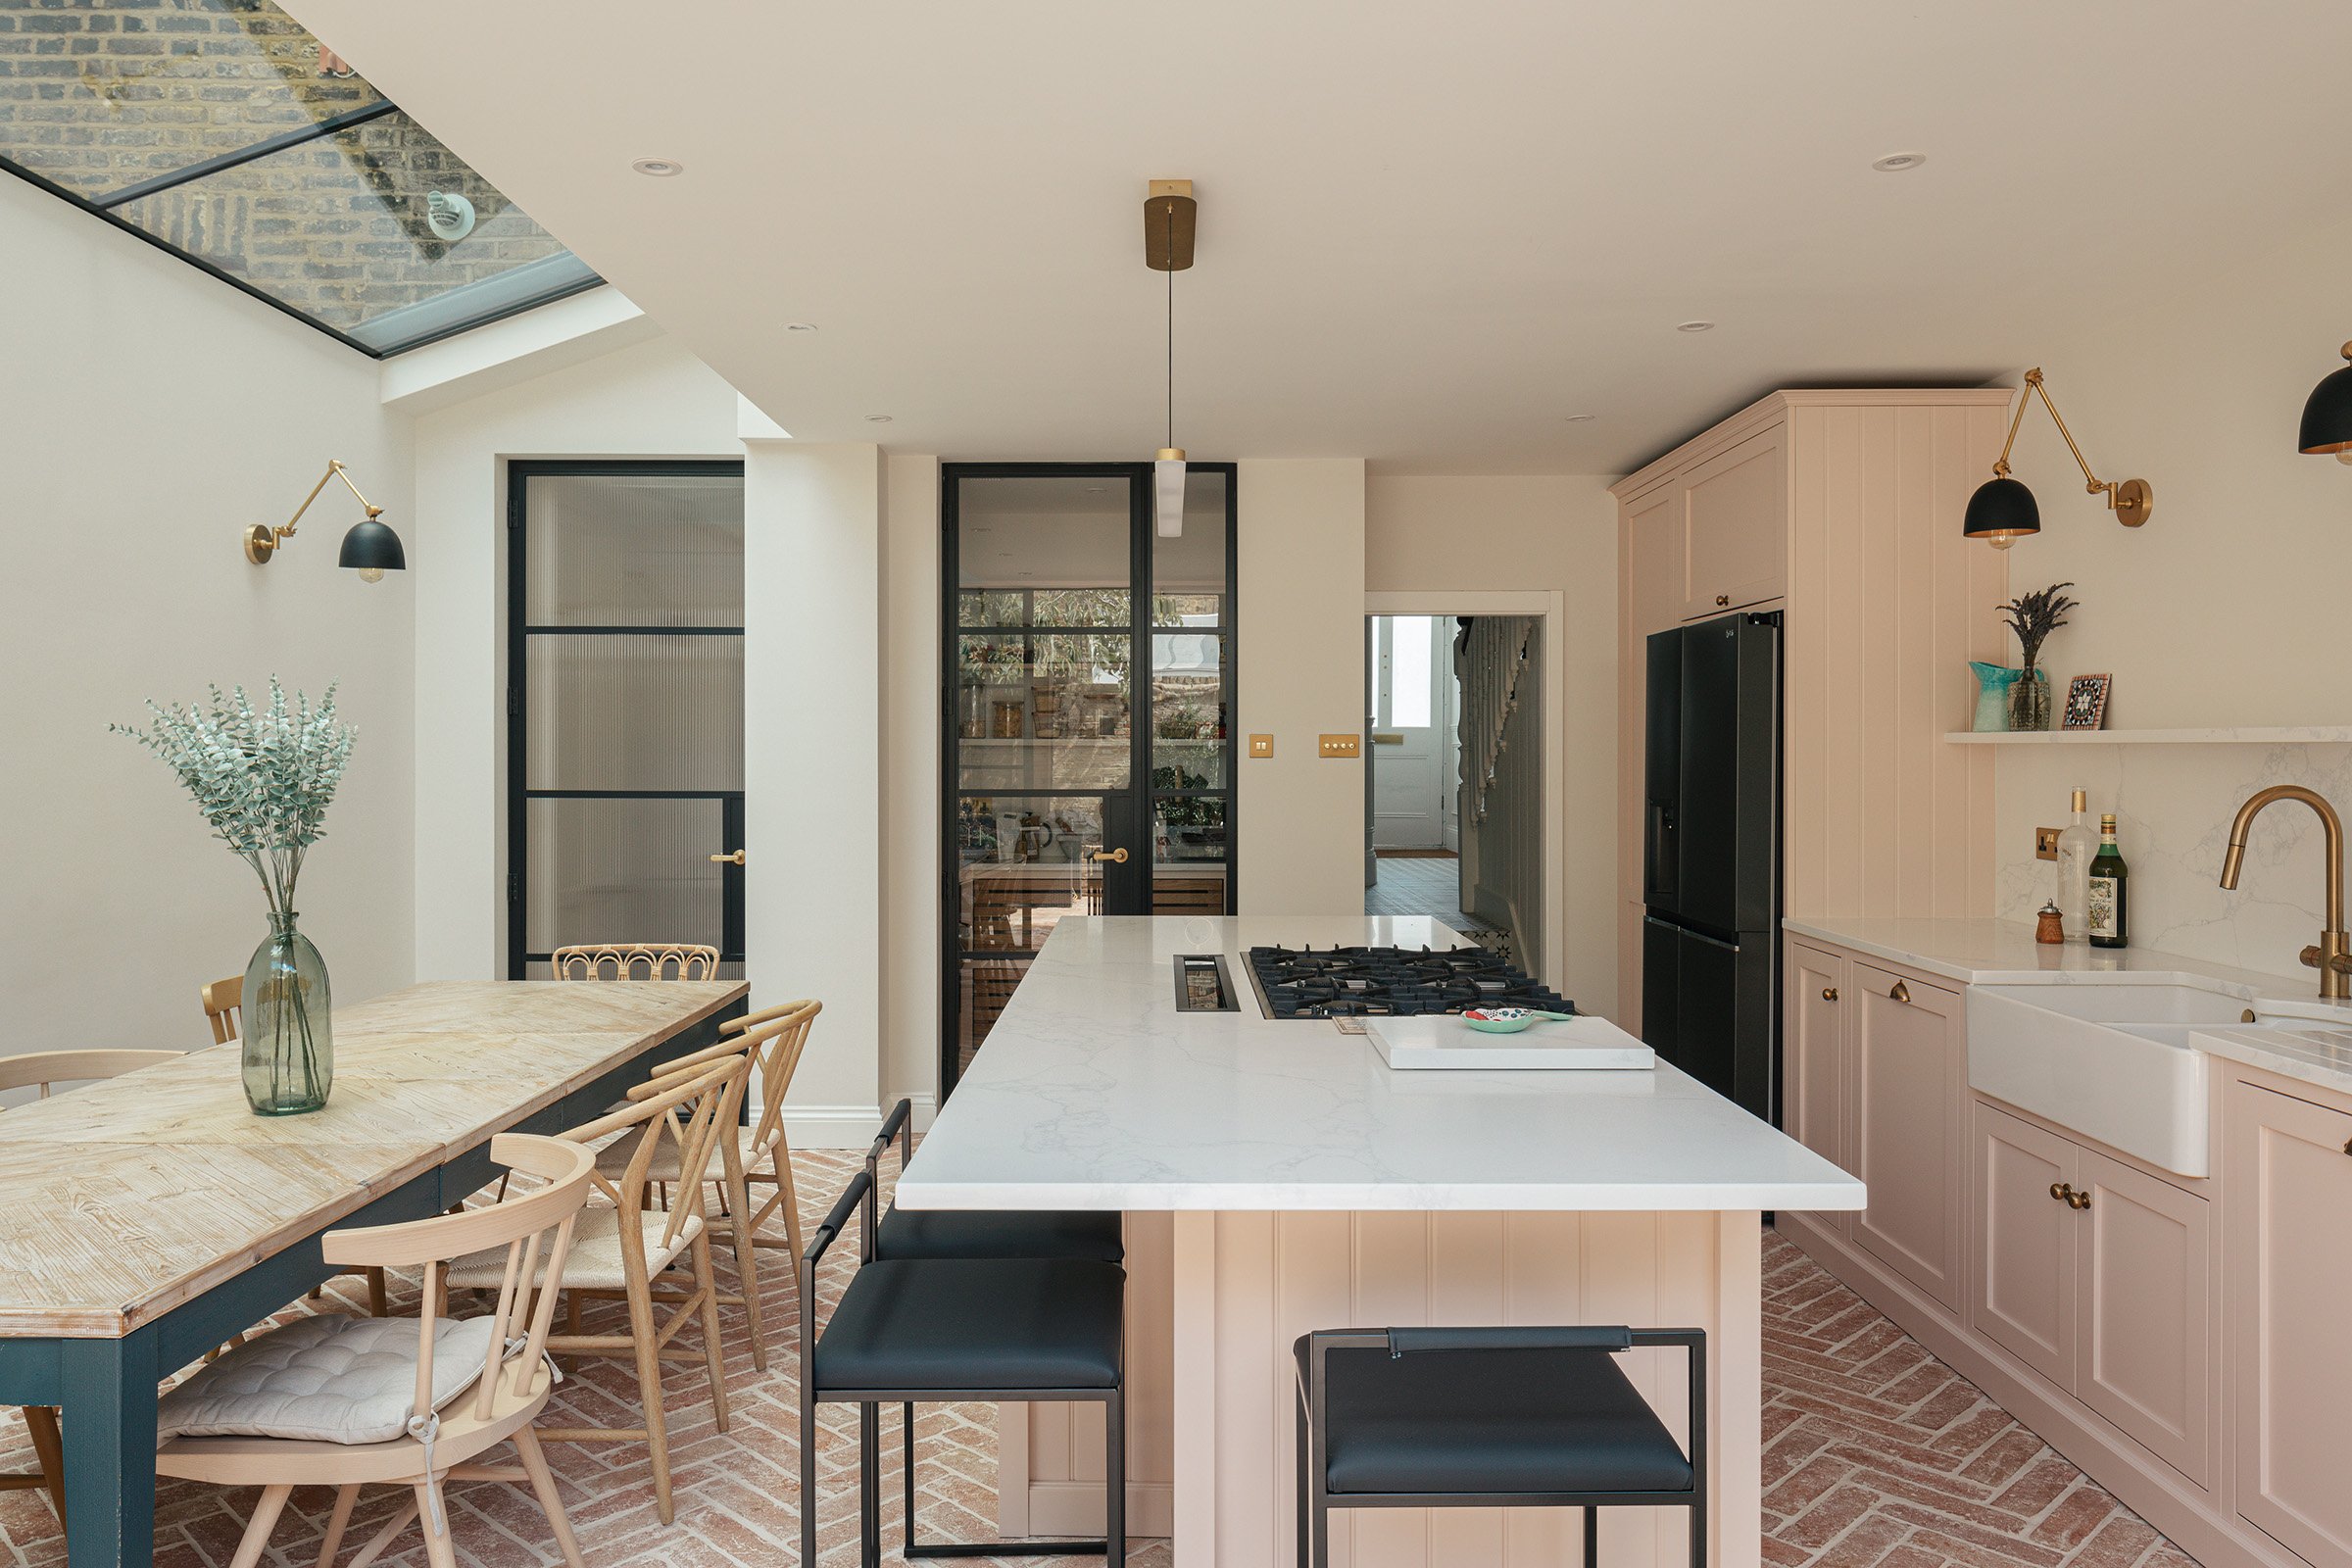 08-putney-pantry-house-victorian-terrace-kitchen-extension-architecture-wandsworth-london-uk-rider-stirland-architects.jpg